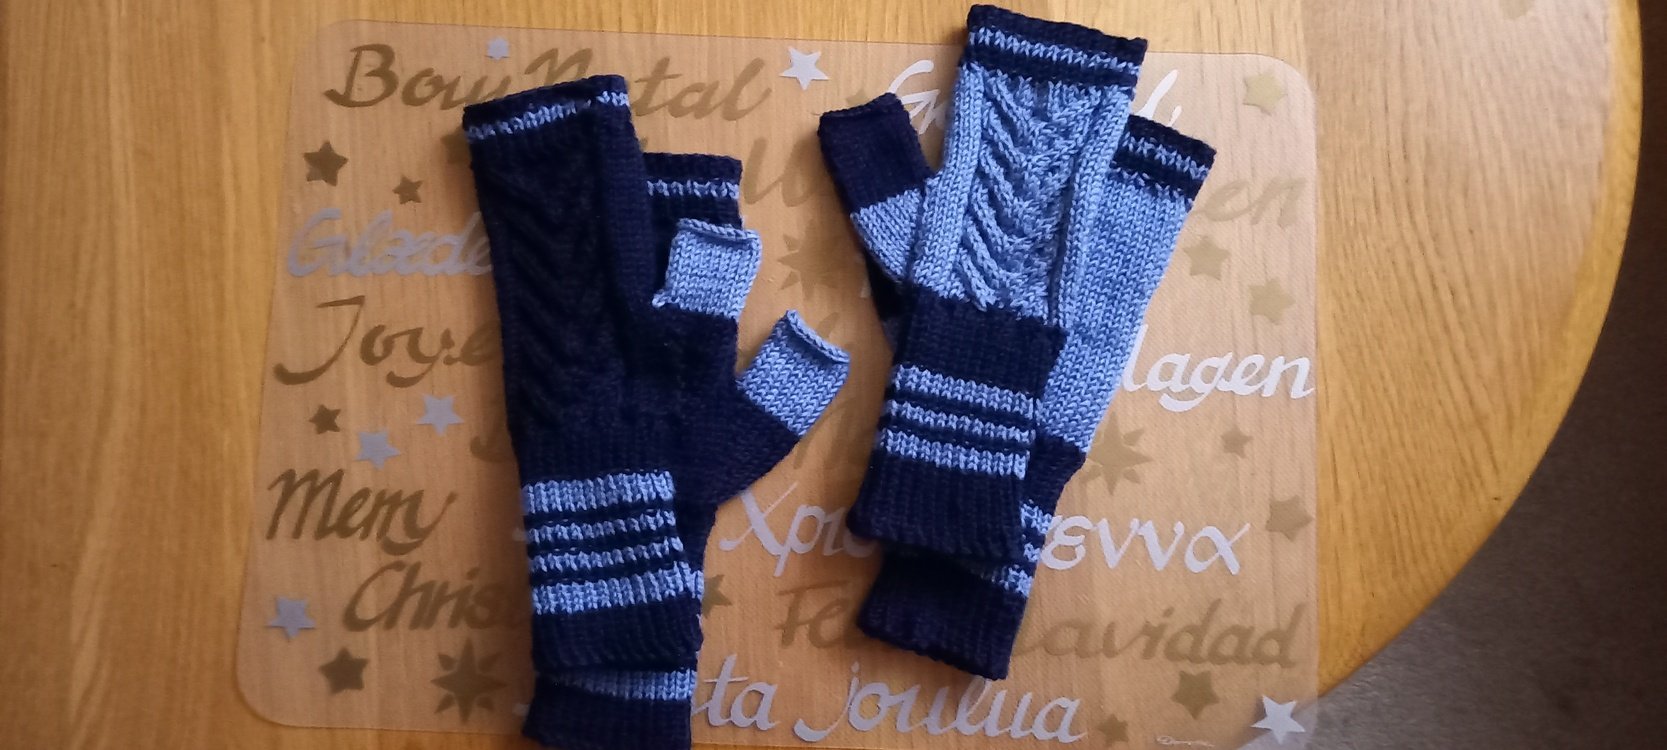 Knitting pattern: Hand cuffs with decorative braid